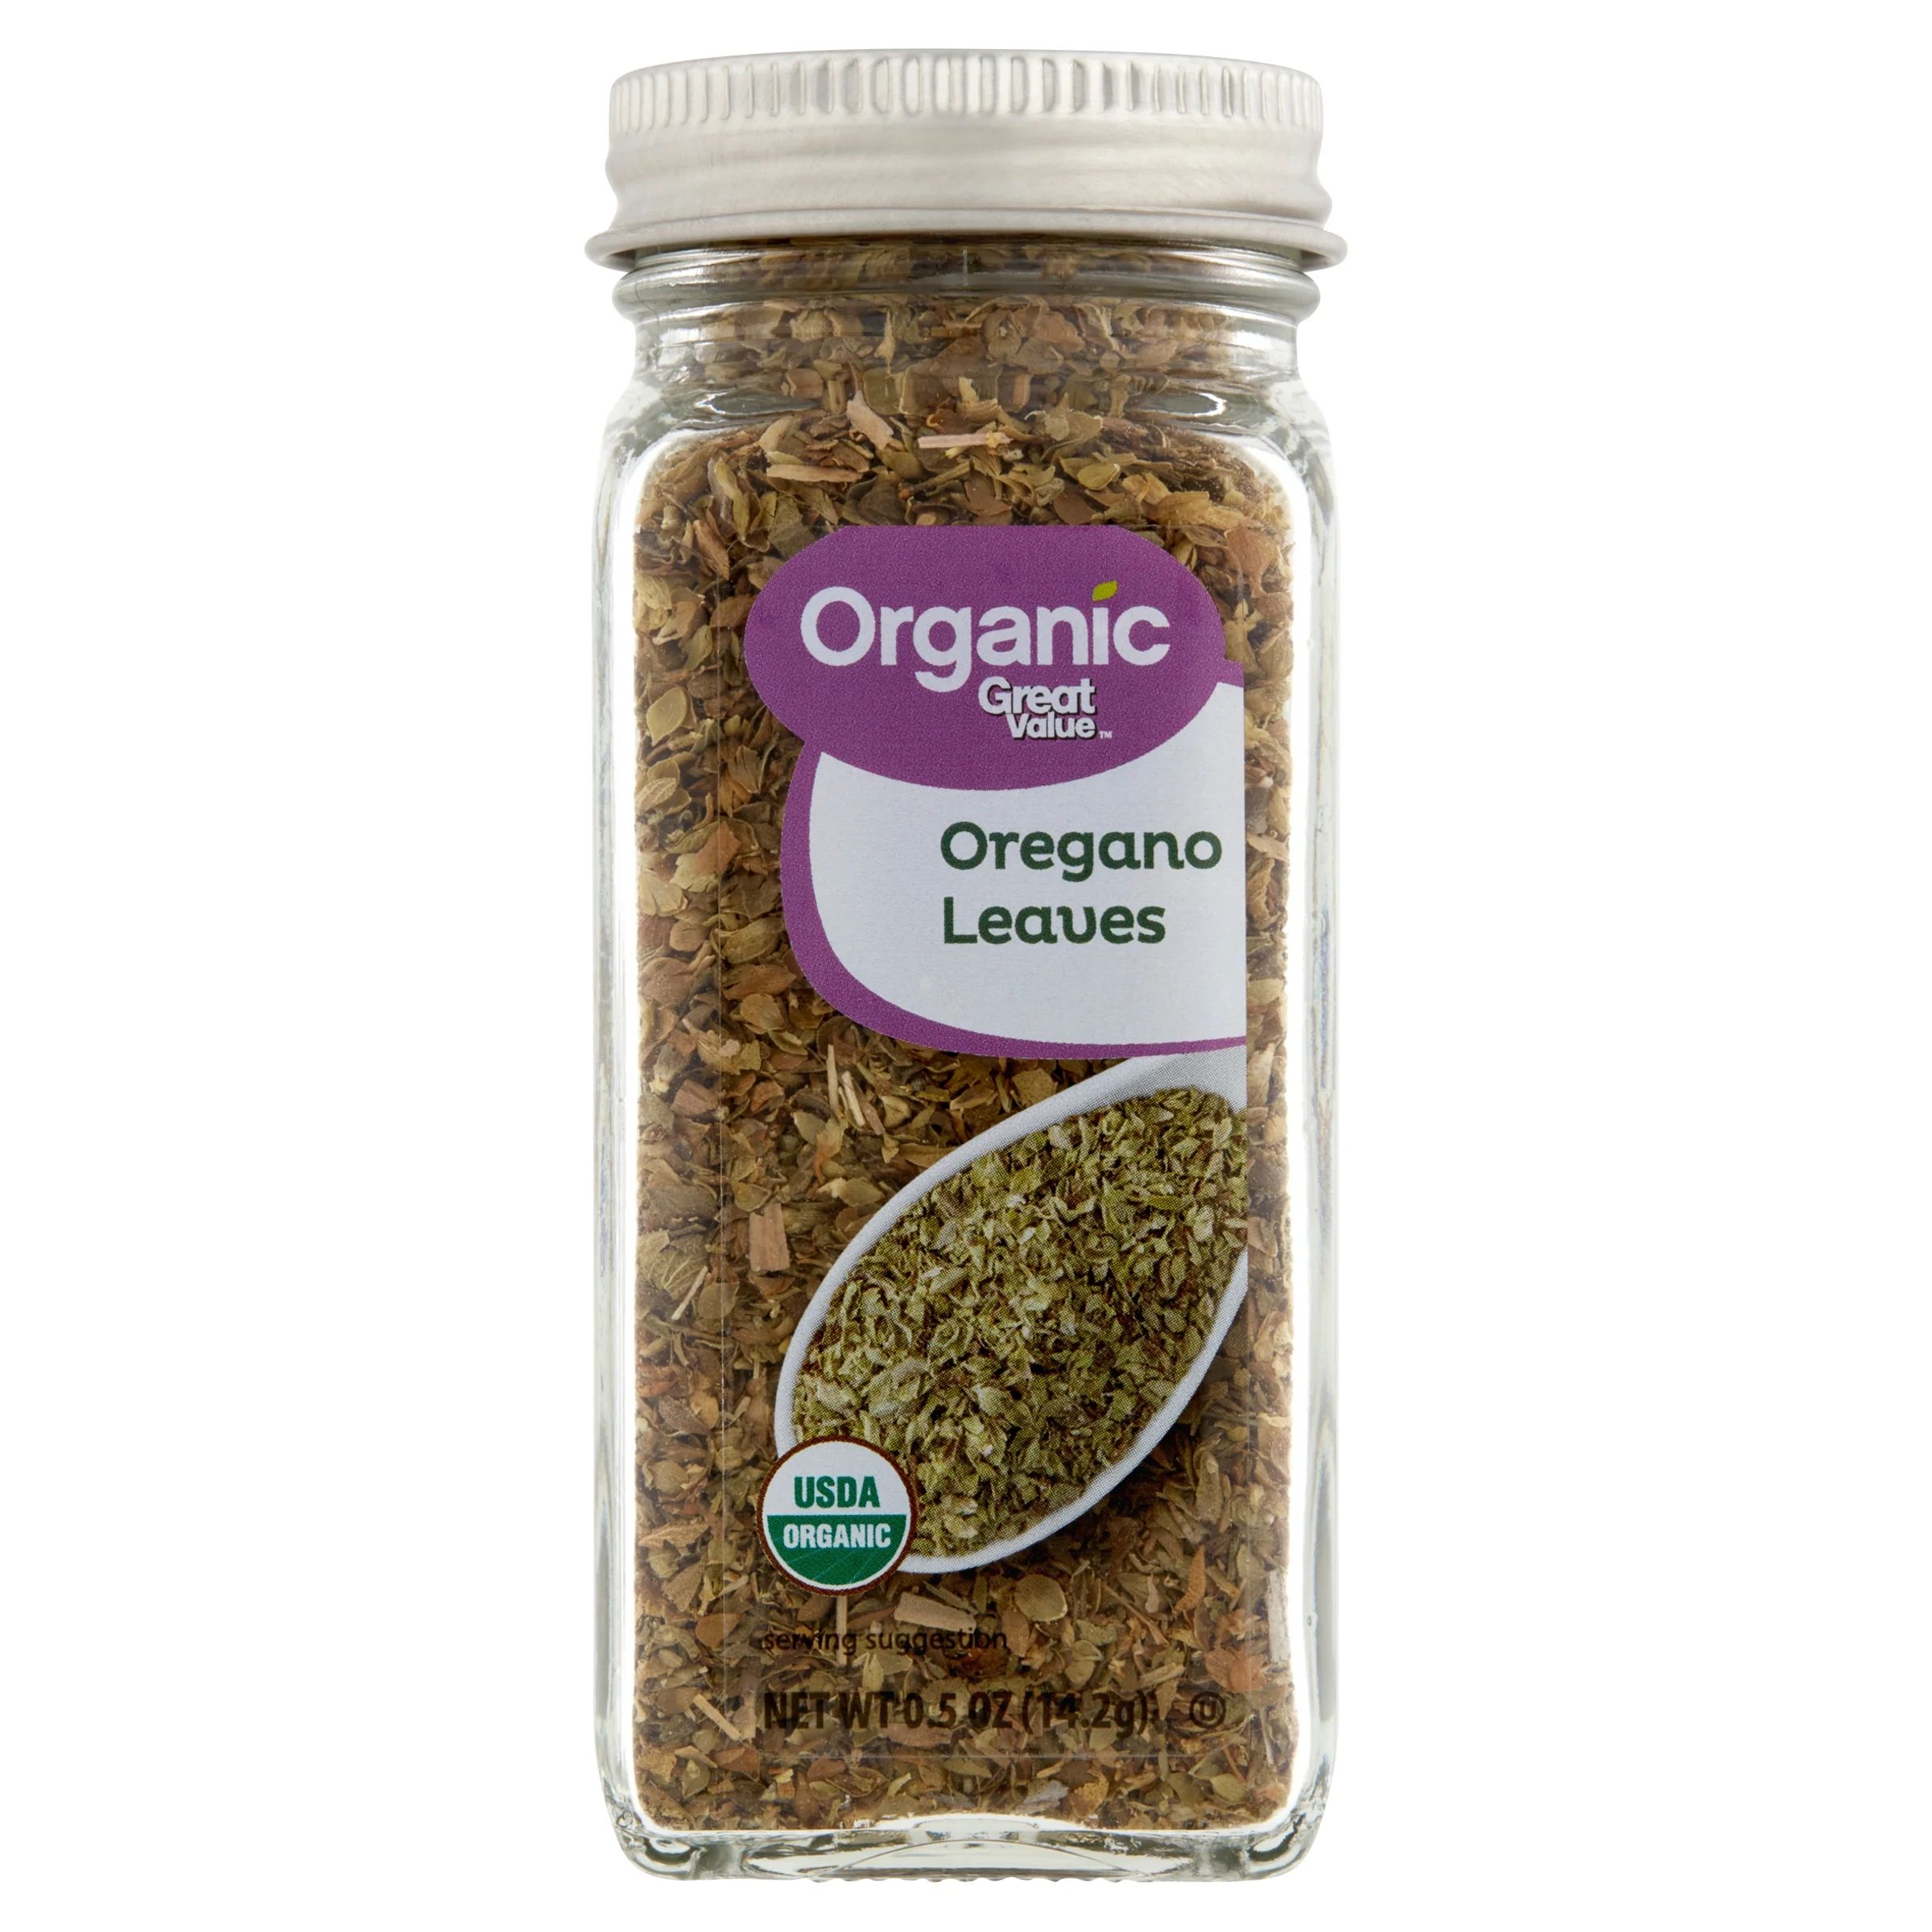 Great Value Organic Oregano Leaves, 0.5 oz - Walmart.com | Walmart (US)